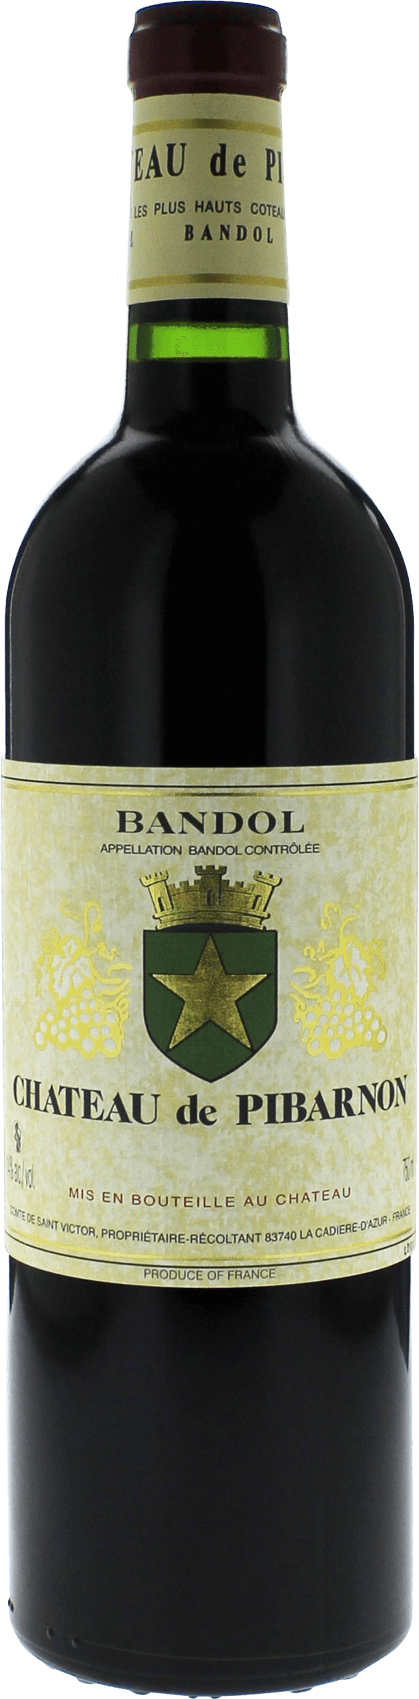 Bandol domaine de pibarnon rouge 1997  Bandol, Slection provence rouge